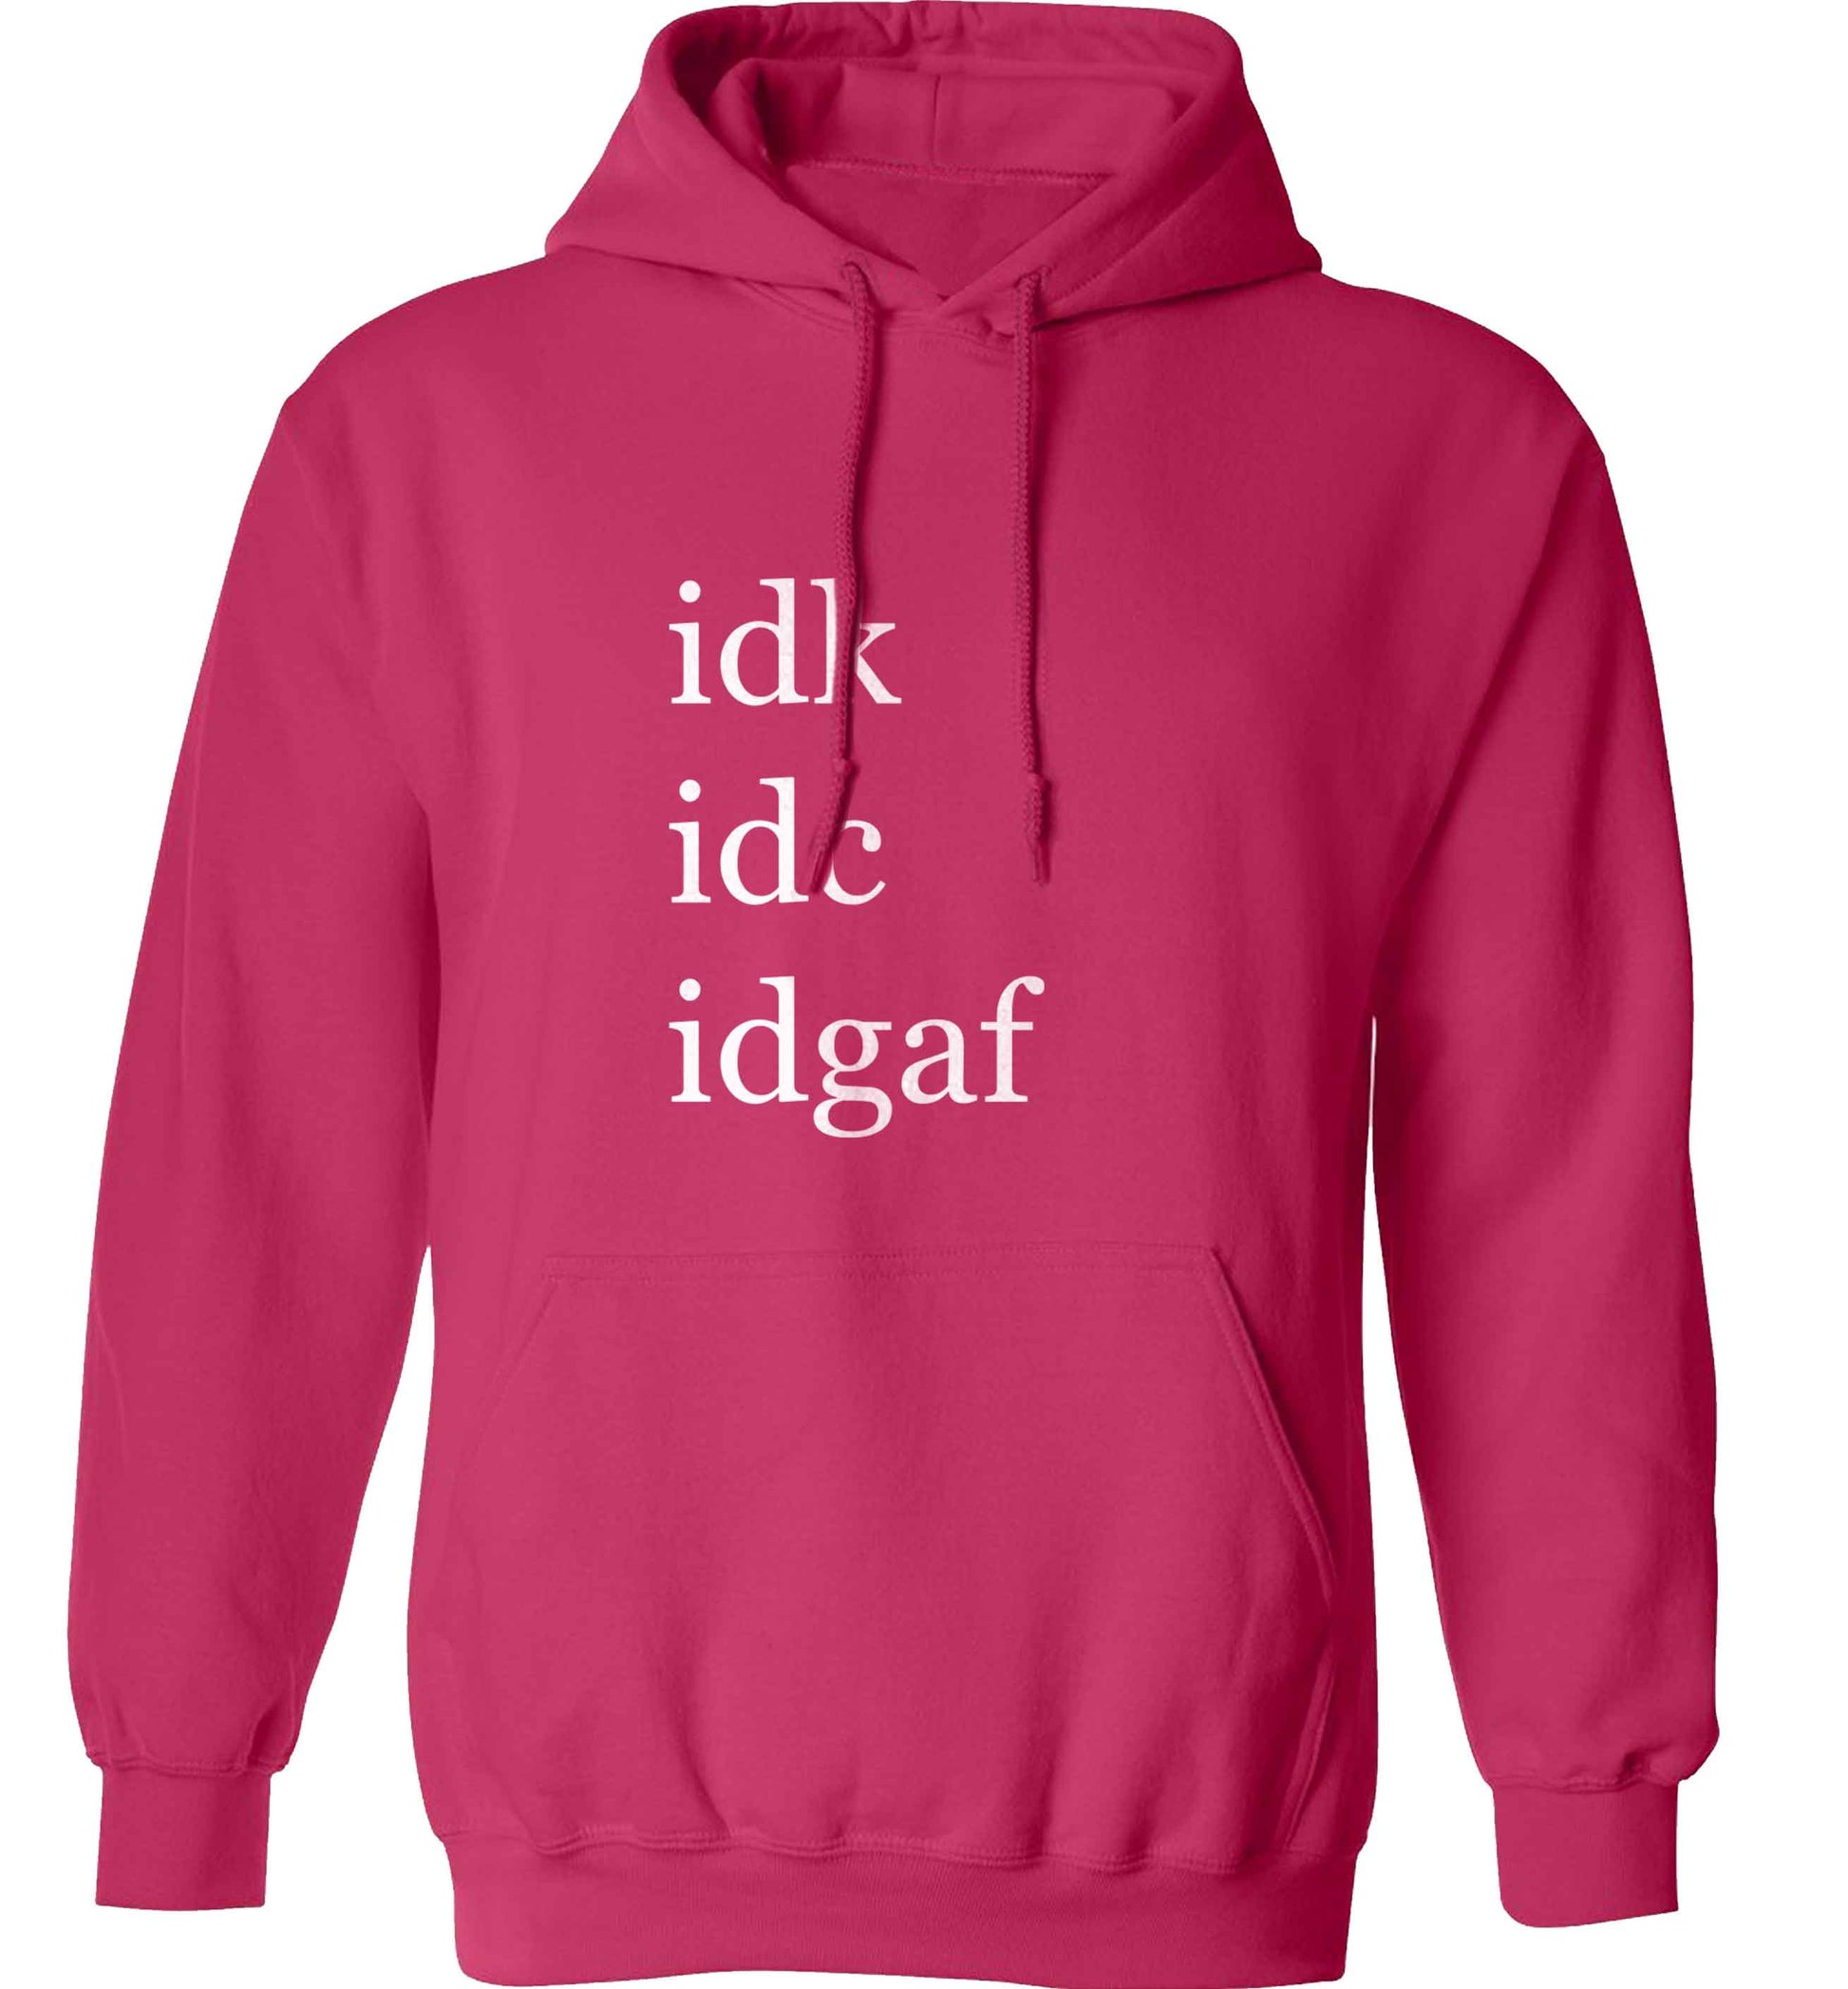 Idk Idc Idgaf adults unisex pink hoodie 2XL